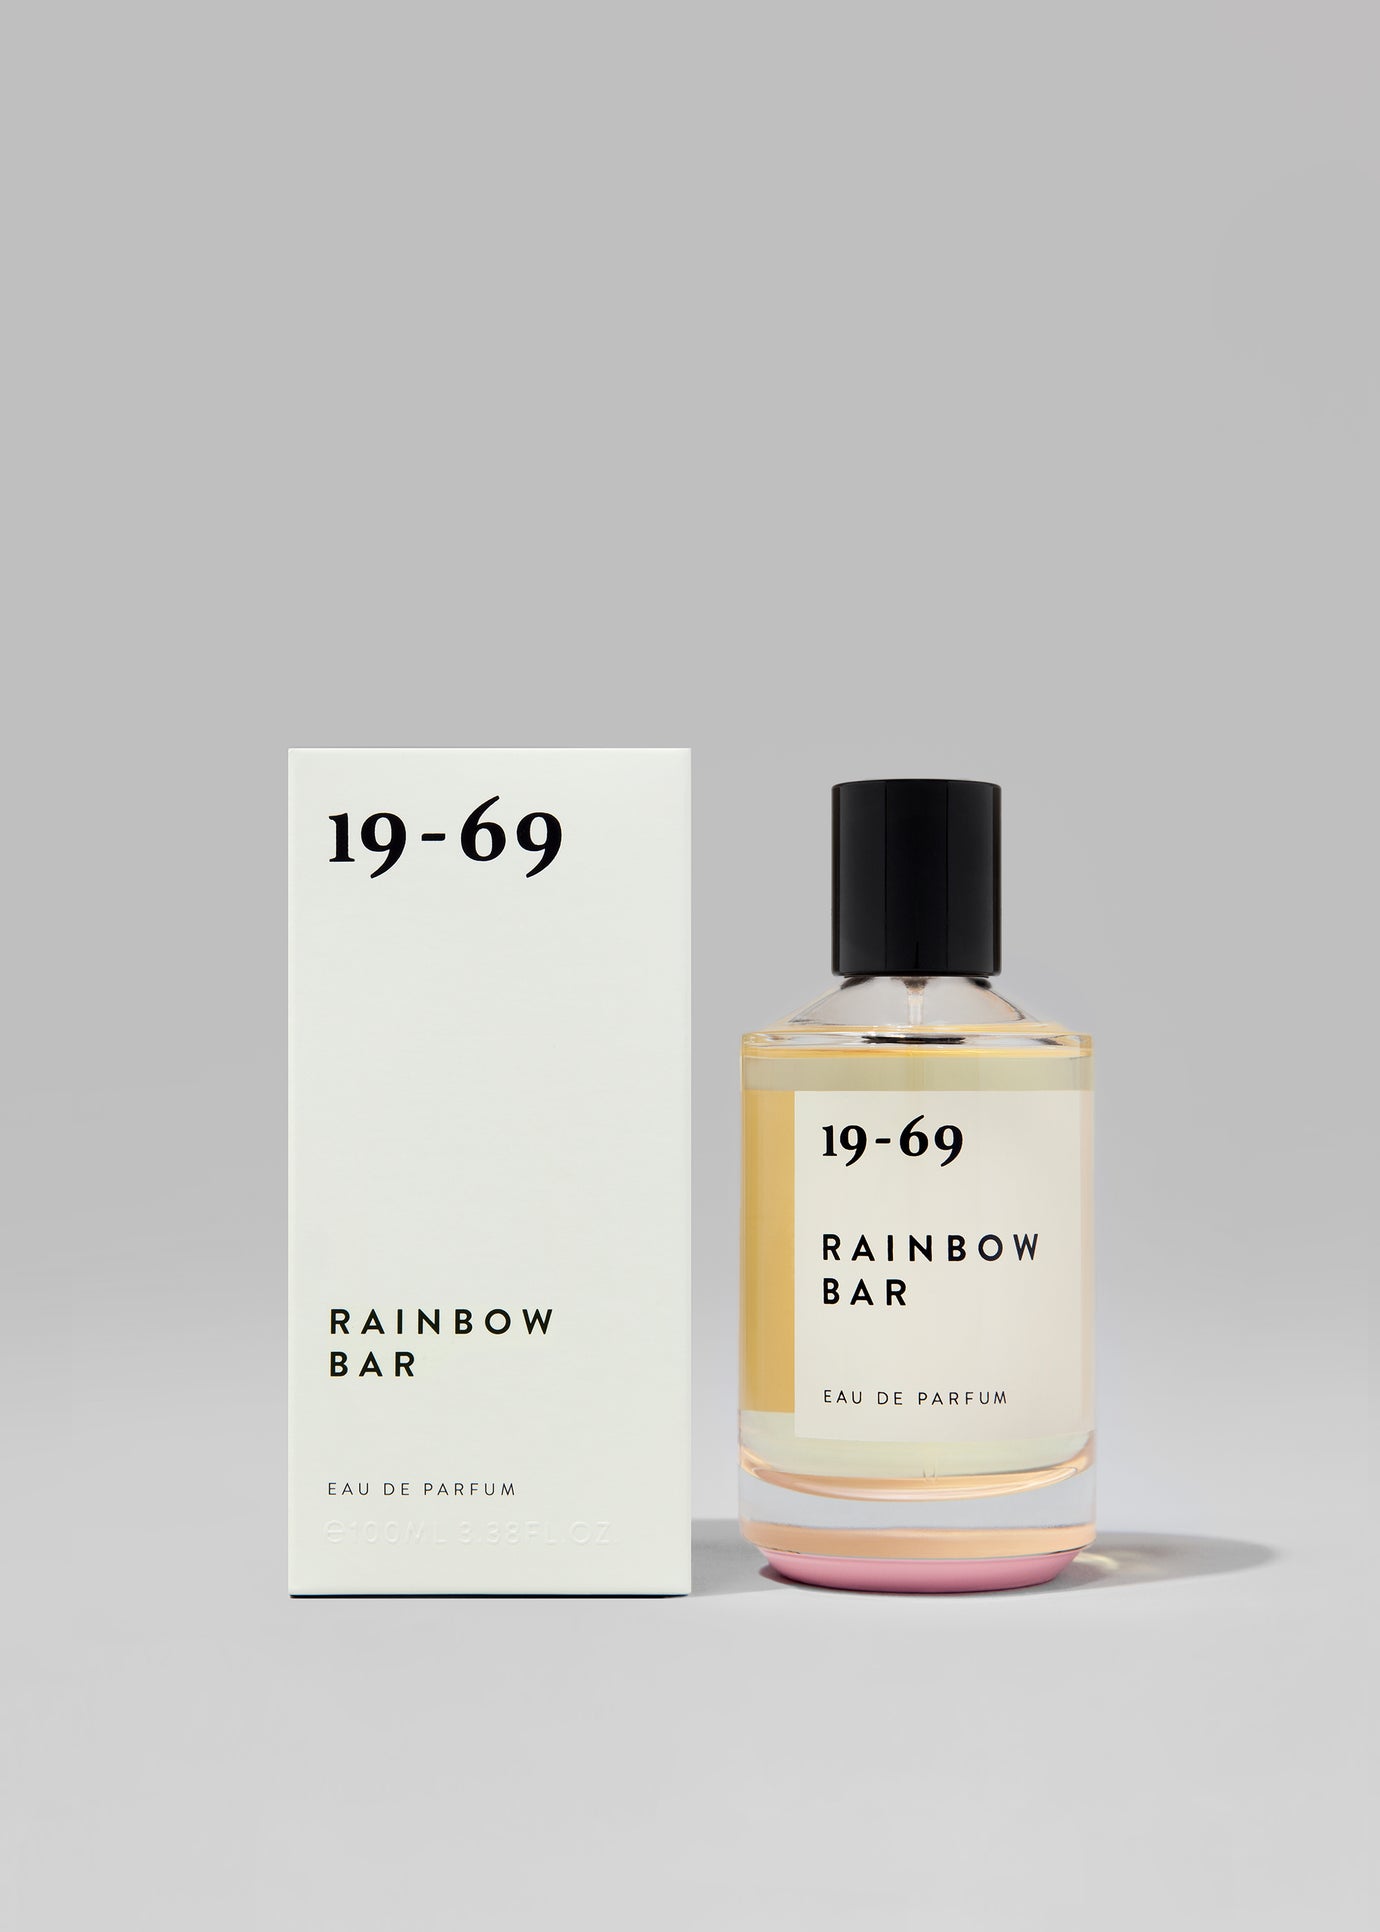 19-69 Rainbow Bar Eau de Parfum - 1